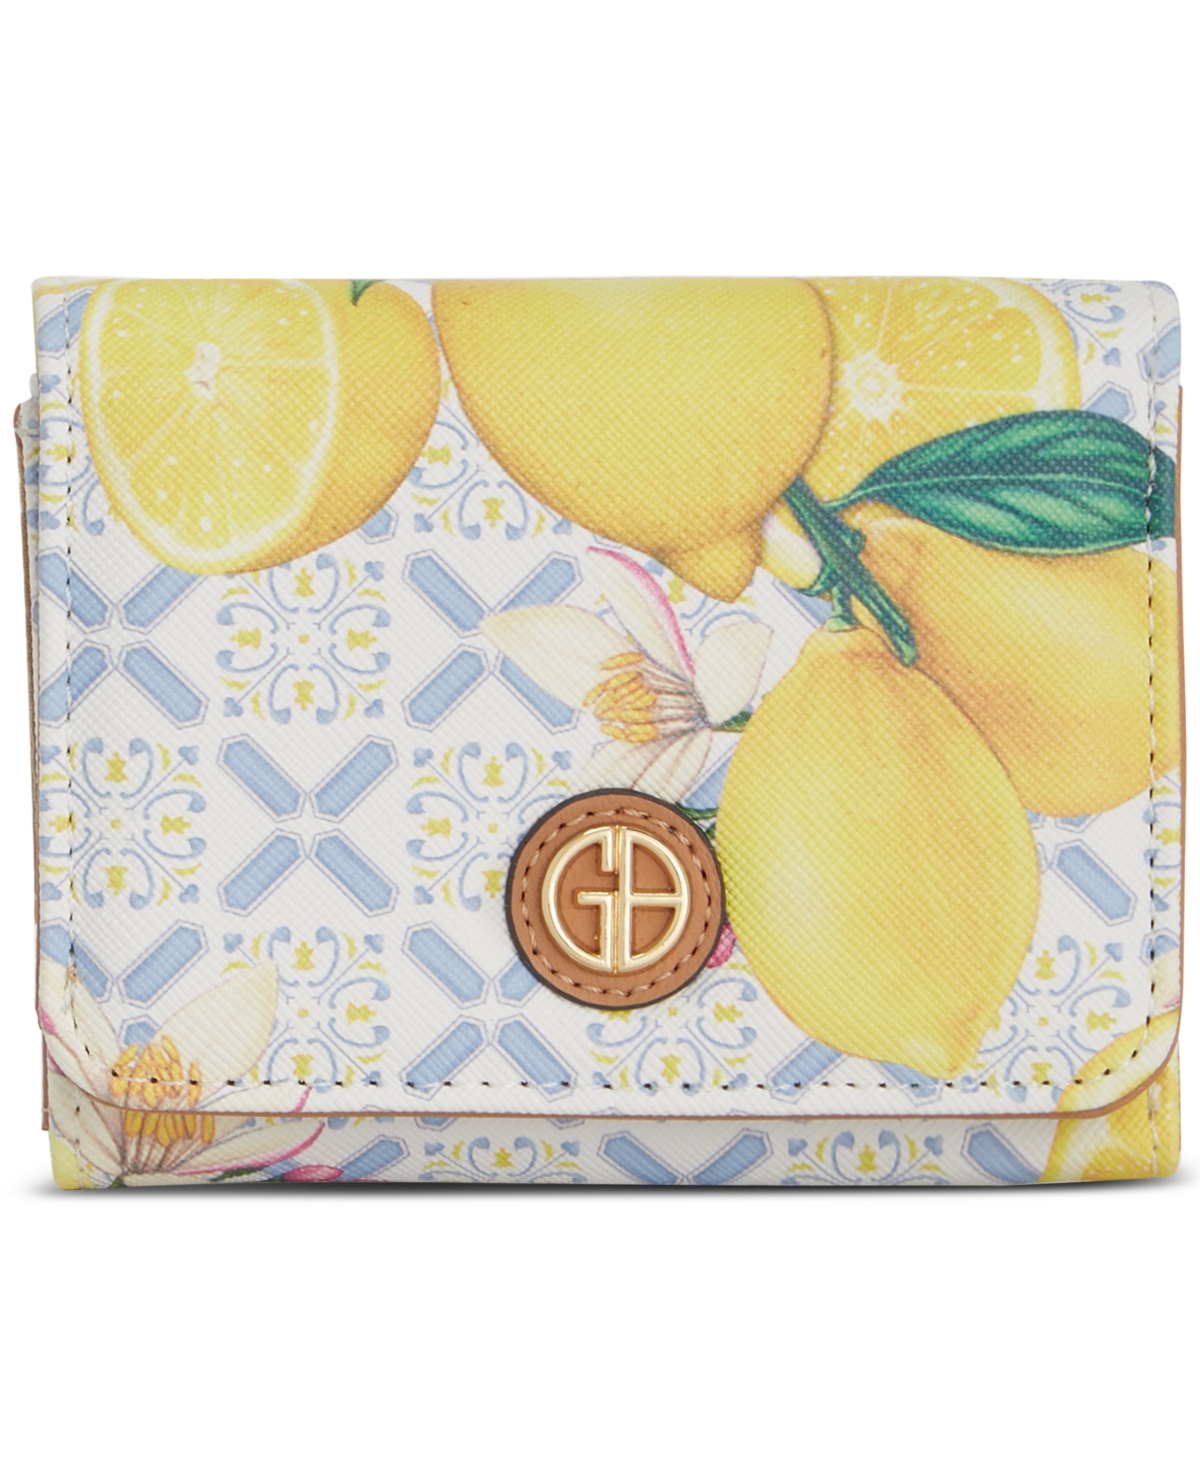 Lemon Print Mini Trifold Wallet, Created for Macy's - Lemon Print